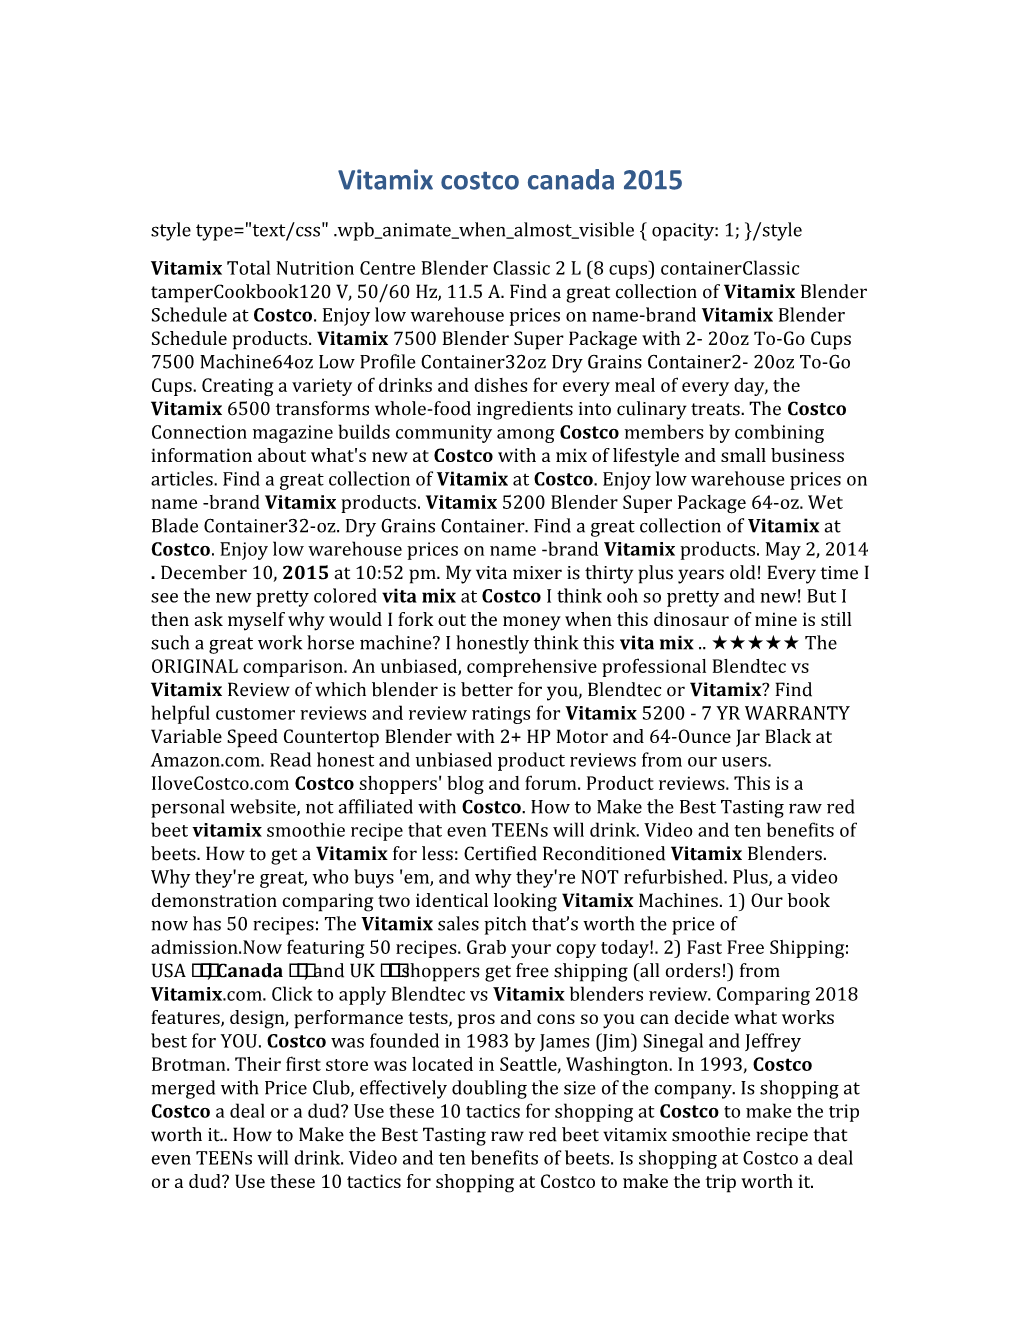 Vitamix Costco Canada 2015